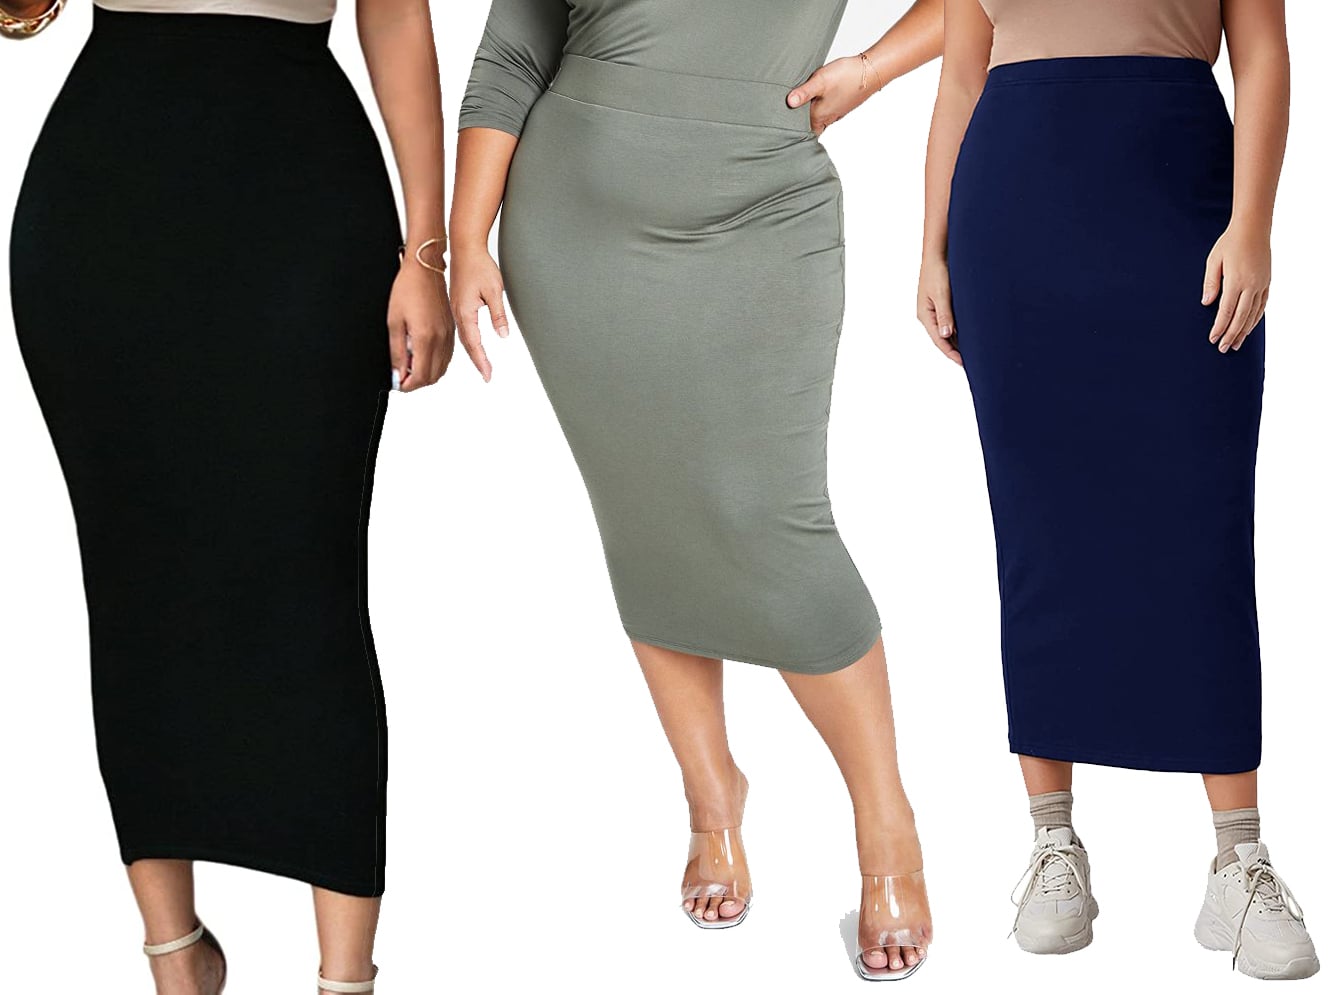 Lrady Women's High Waist Slim Bodycon Skirt; Bar III Plus Size Bodycon Jersey Midi Skirt; Verdusa Women's Plus Size Elastic High-Waist Long Bodycon Skirt